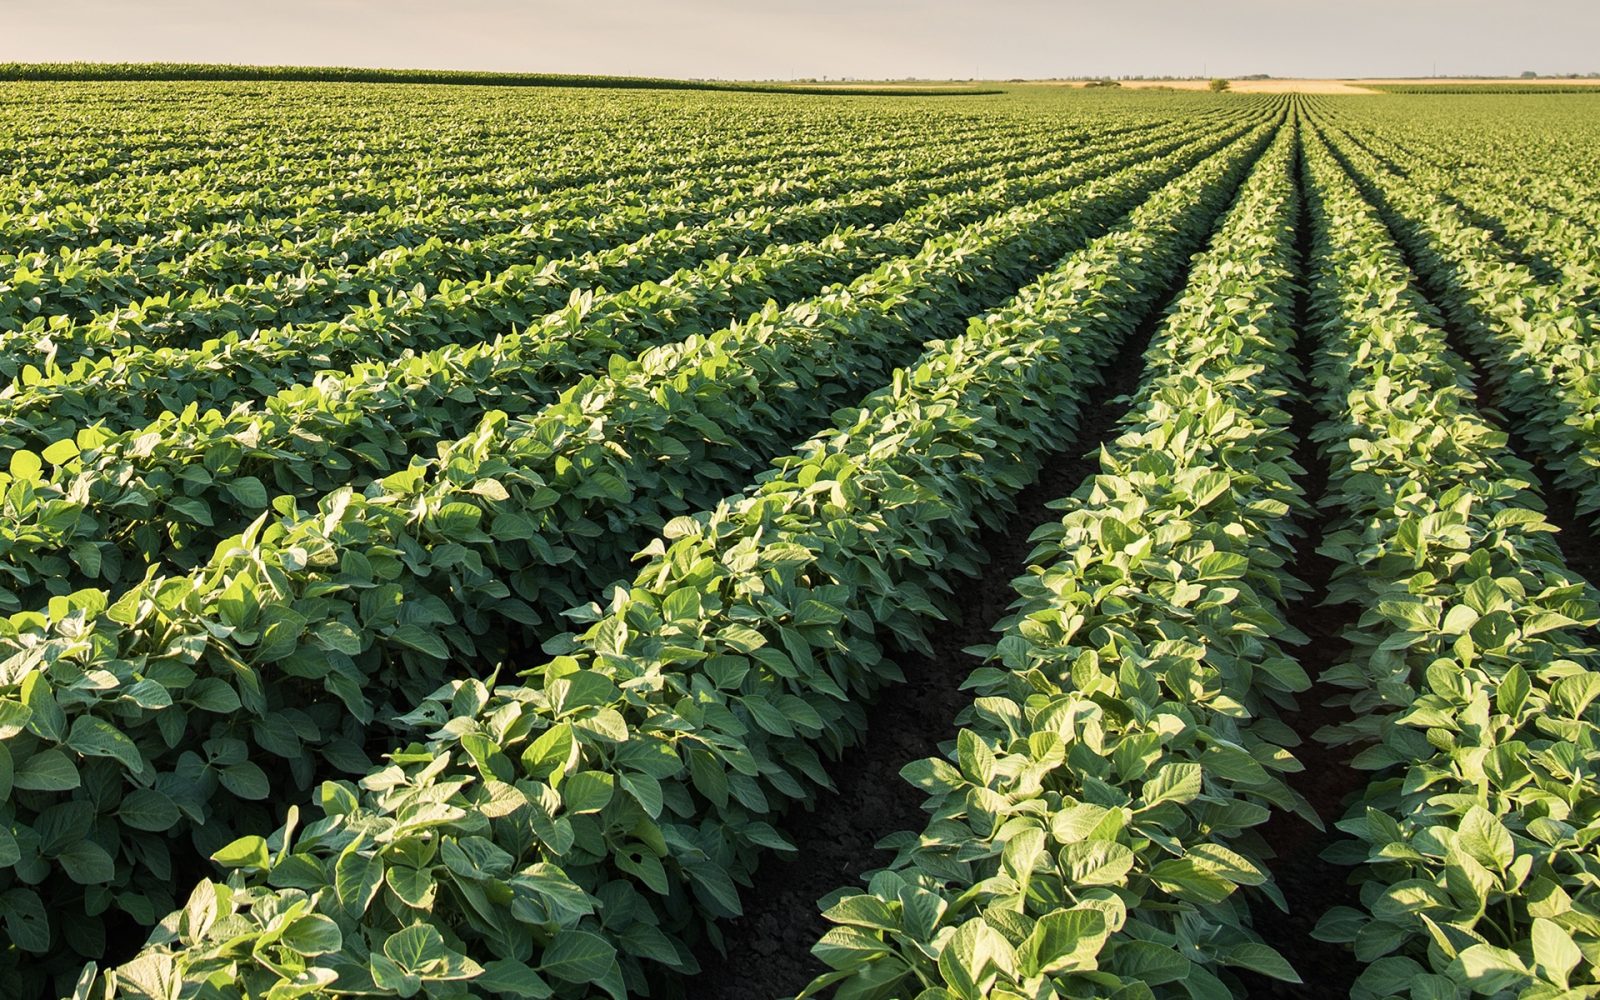 Large soybean field growing in rows